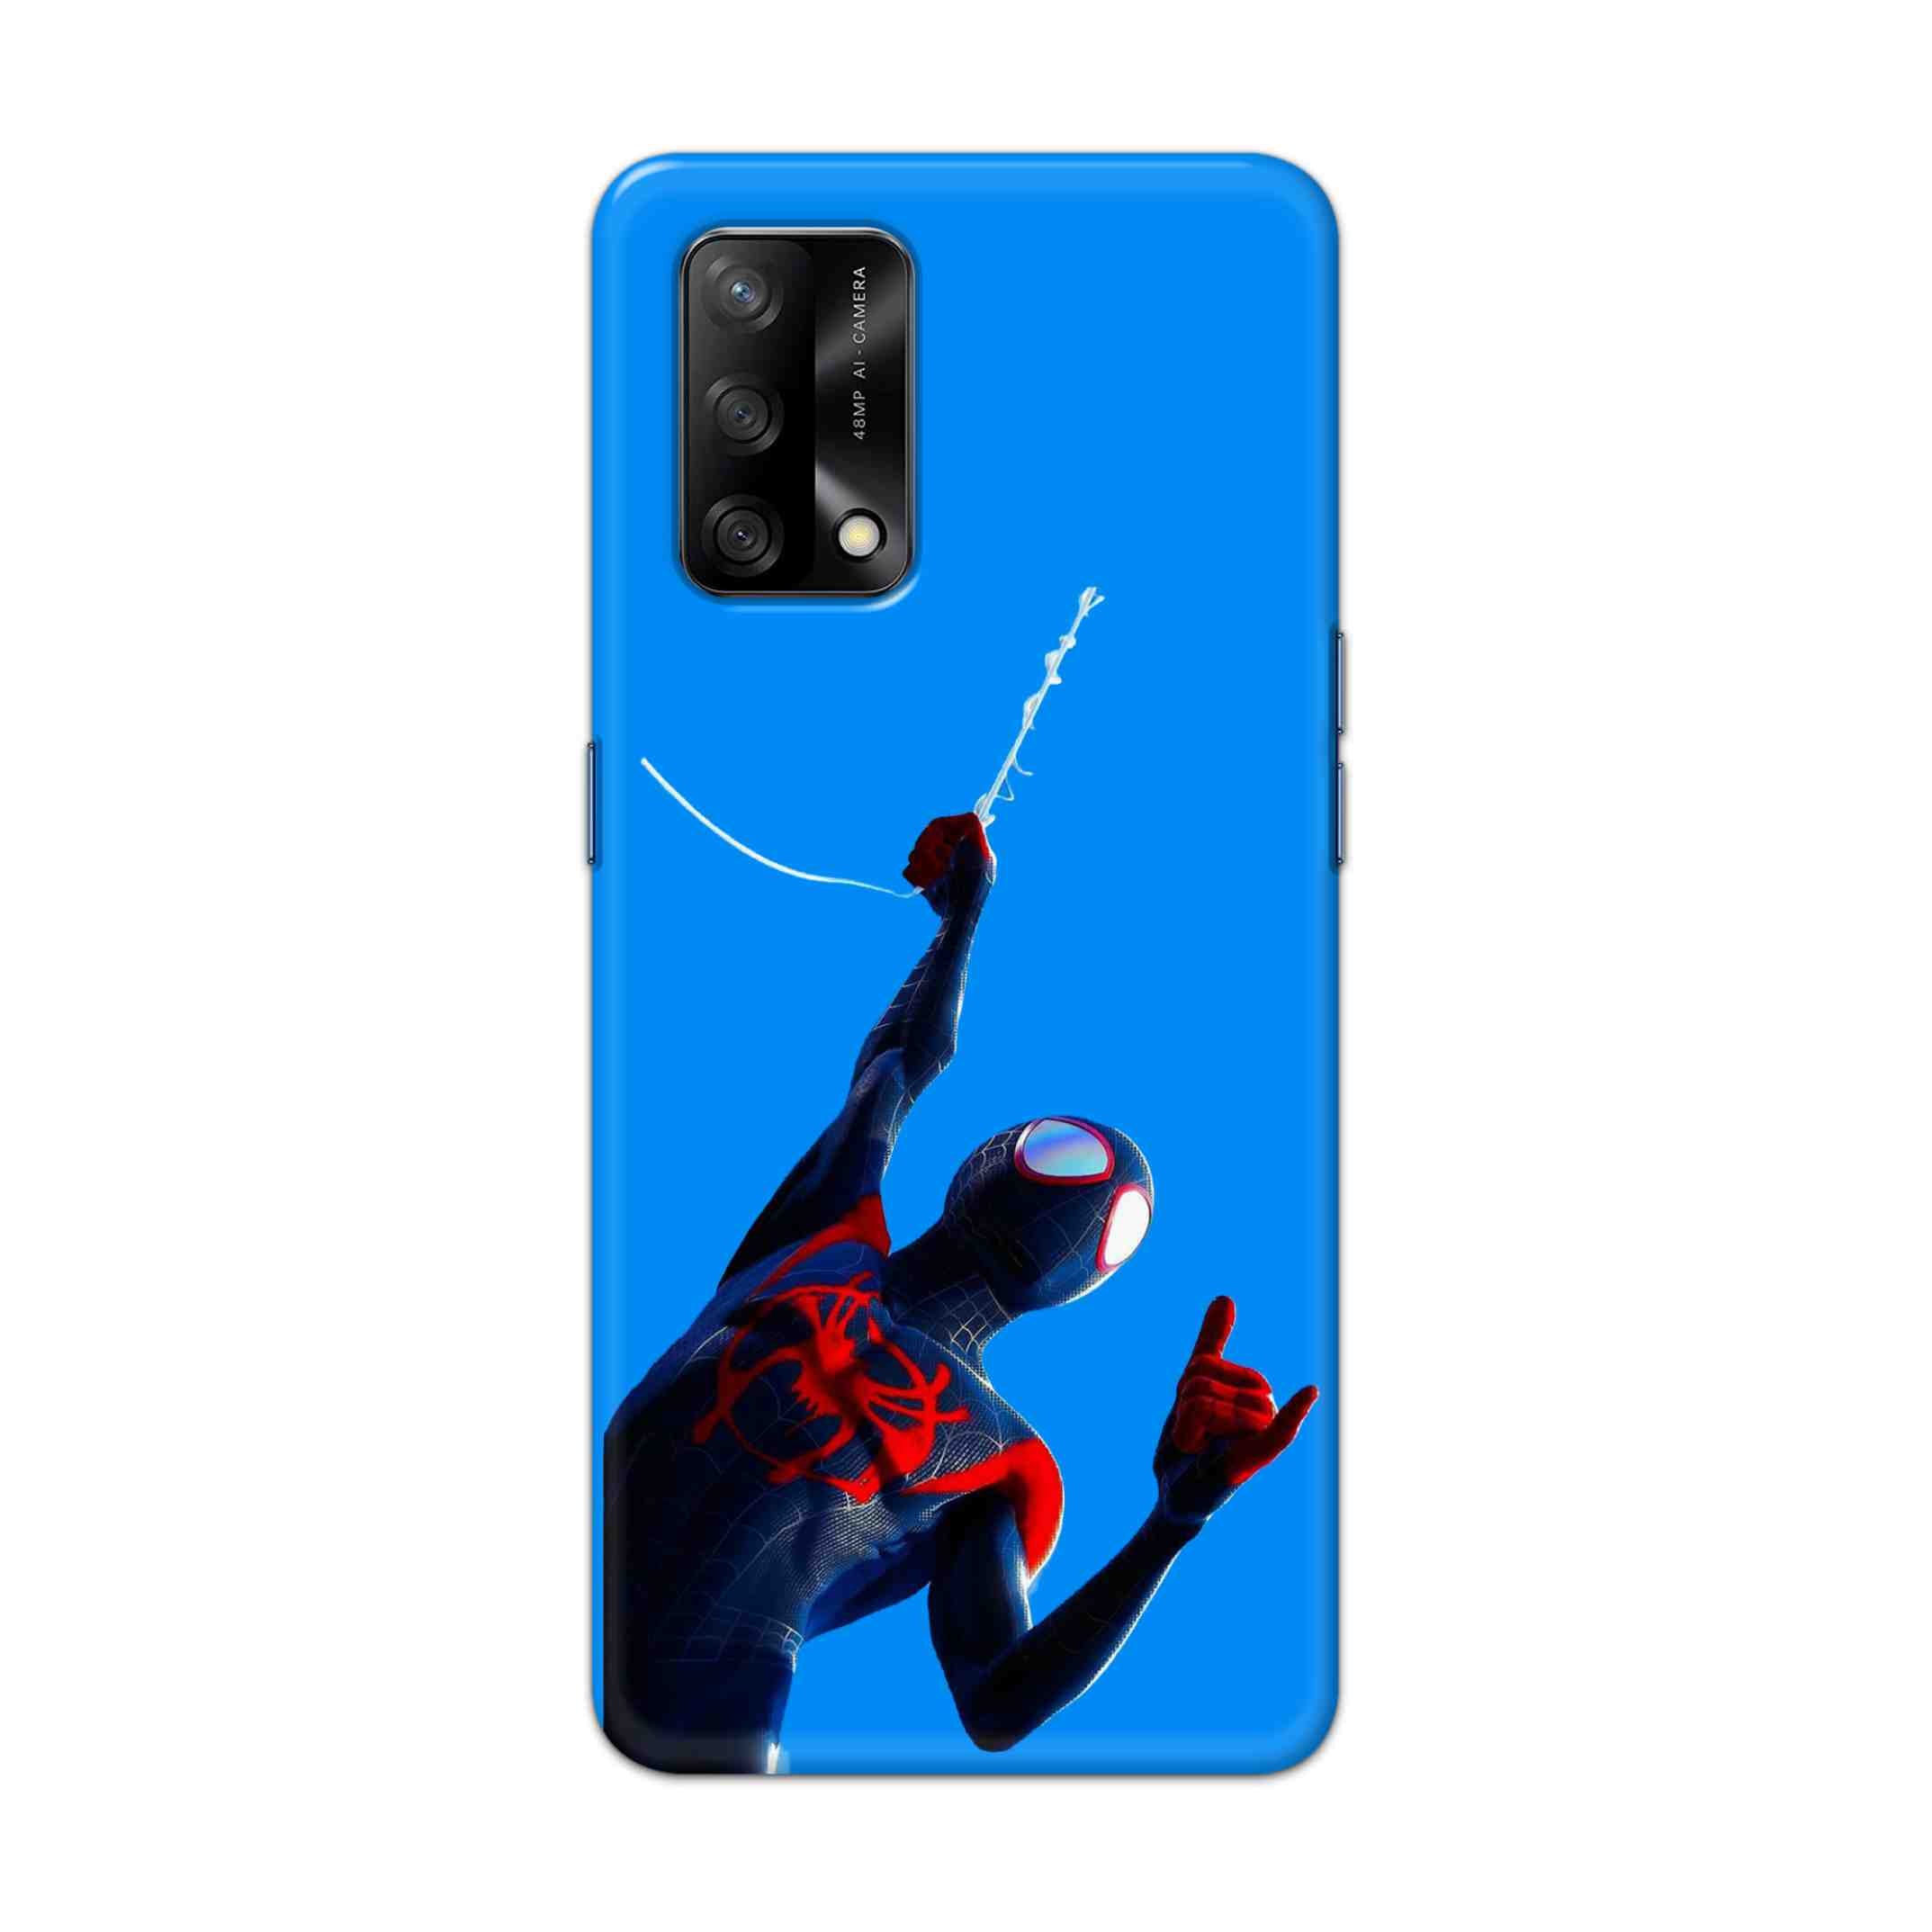 Buy Miles Morales Spiderman Hard Back Mobile Phone Case Cover For Oppo F19 Online